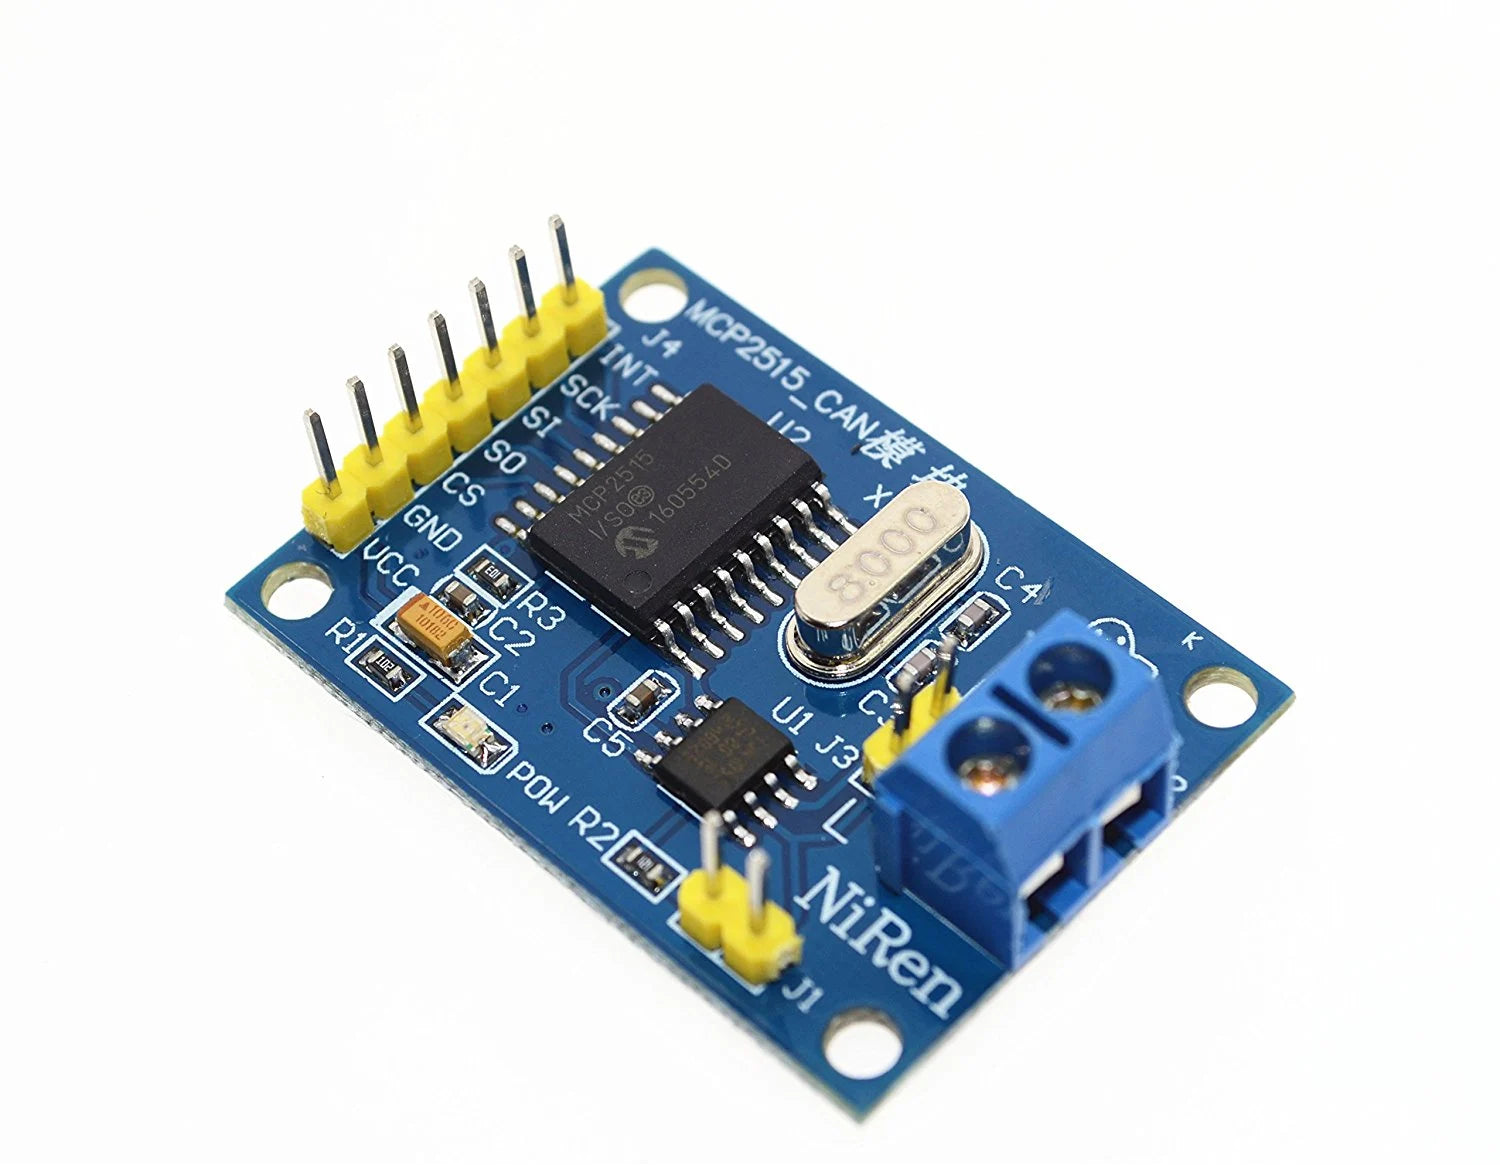 MCP2515 CAN Module TJA1050 Receiver SPI 51 Single Chip Program Routine Arduino